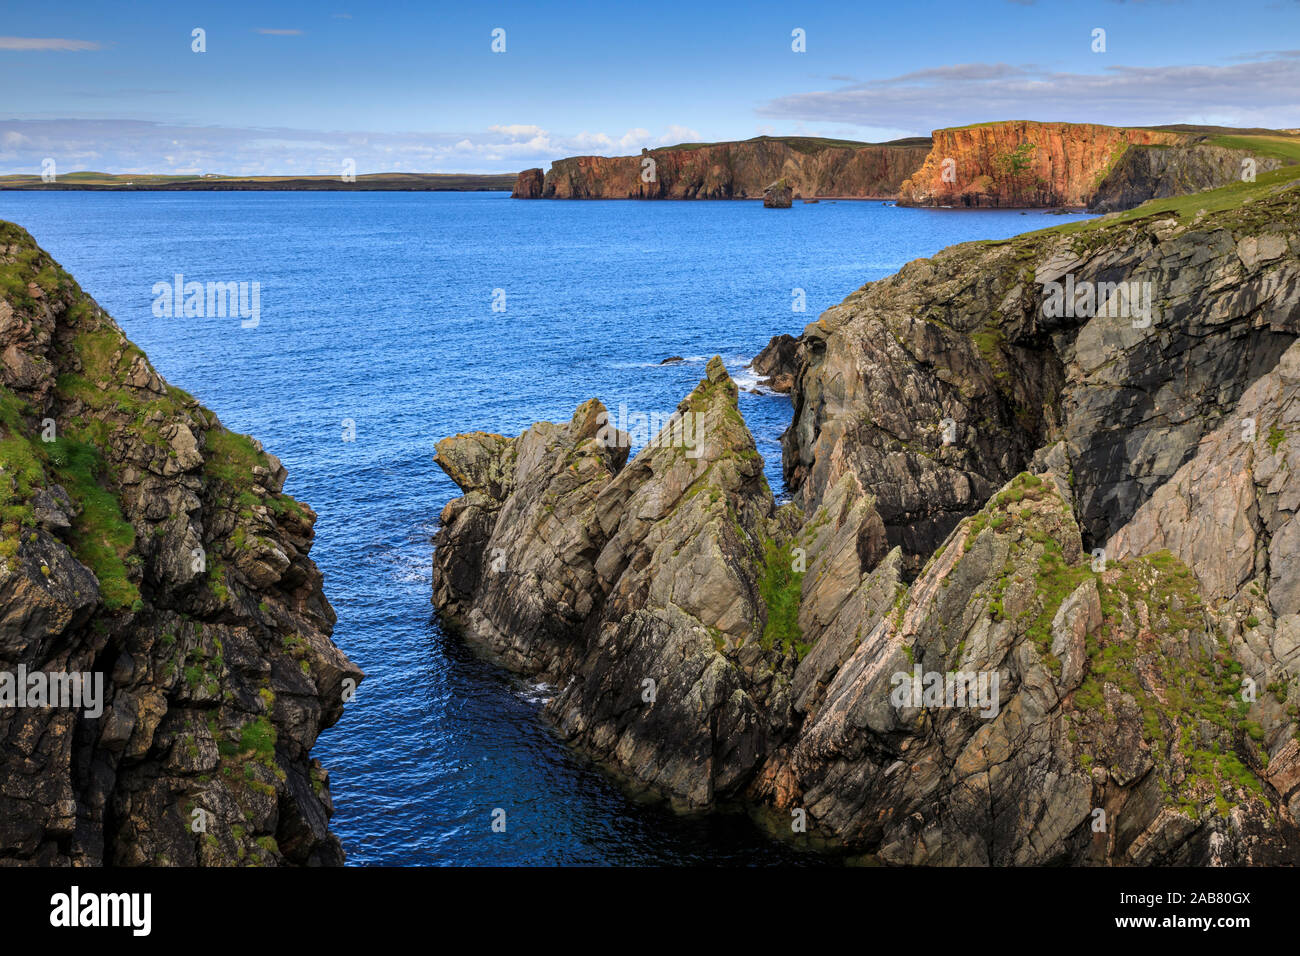 Ness of Hillswick, dramatic jagged cliffs, and red granite cliffs of The Heads of Grocken, Northmavine, Shetland Isles, Scotland, United Kingdom Stock Photo